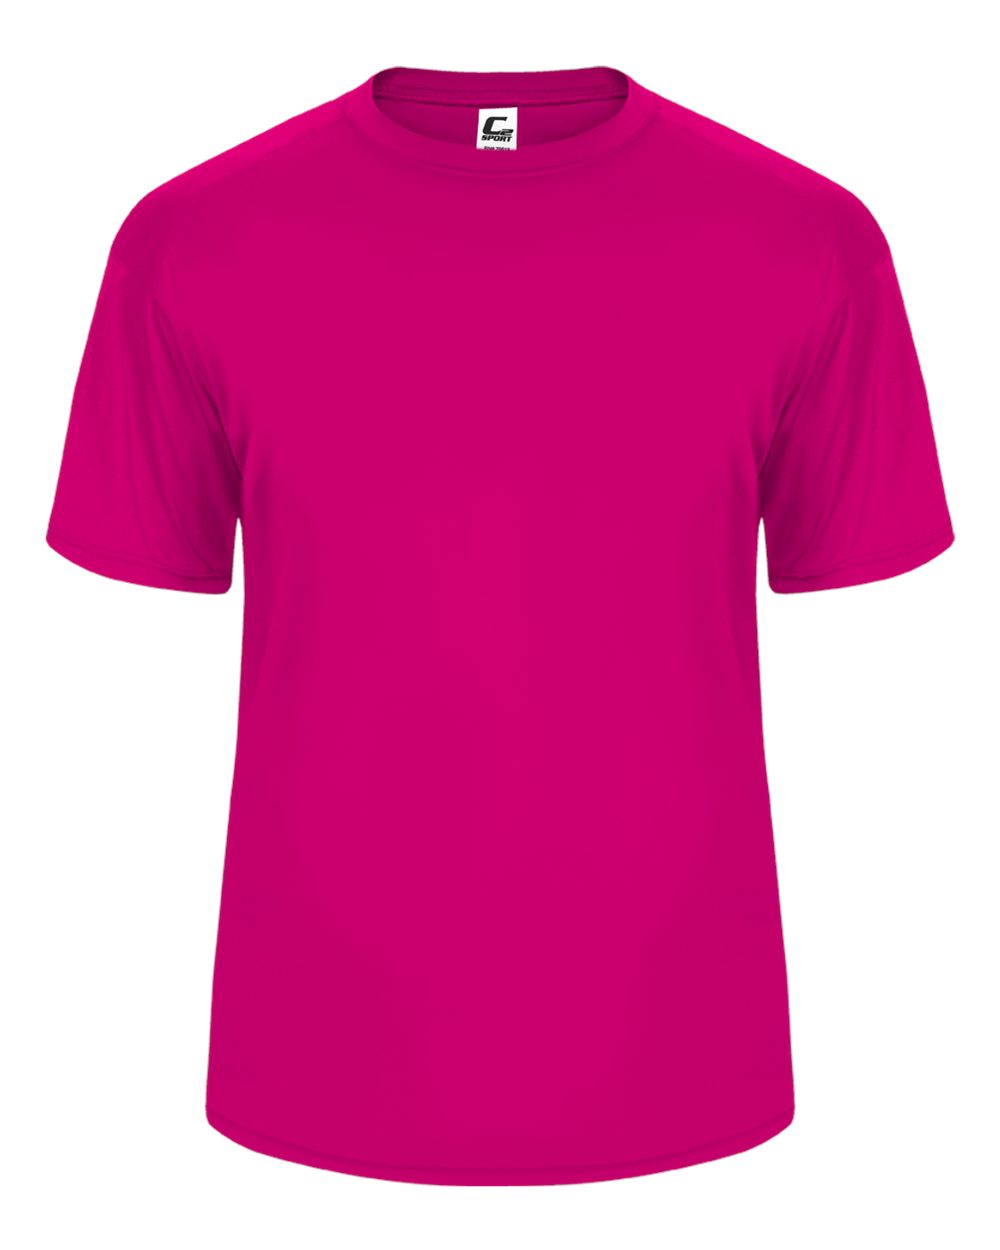 Short & Long Sleeve, Mens/Ladies/Youth Sizes Badger Sport C2 Performance Wicking Athletic Shirt/Undershirt Jersey Tee 